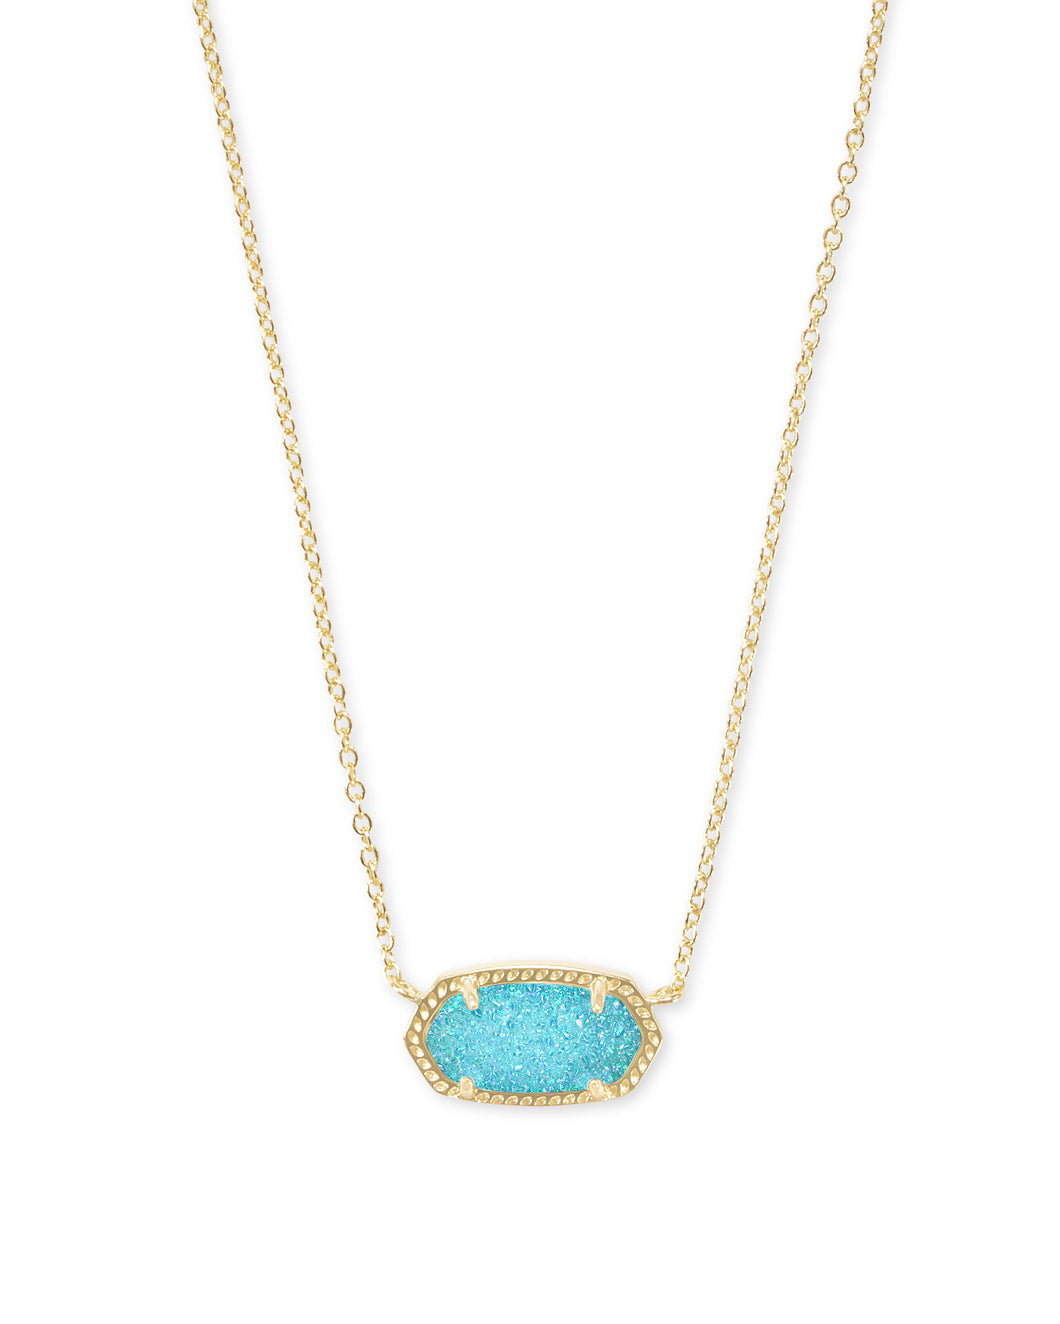 Elisa Gold Pendant Necklace in Bright Aqua Drusy